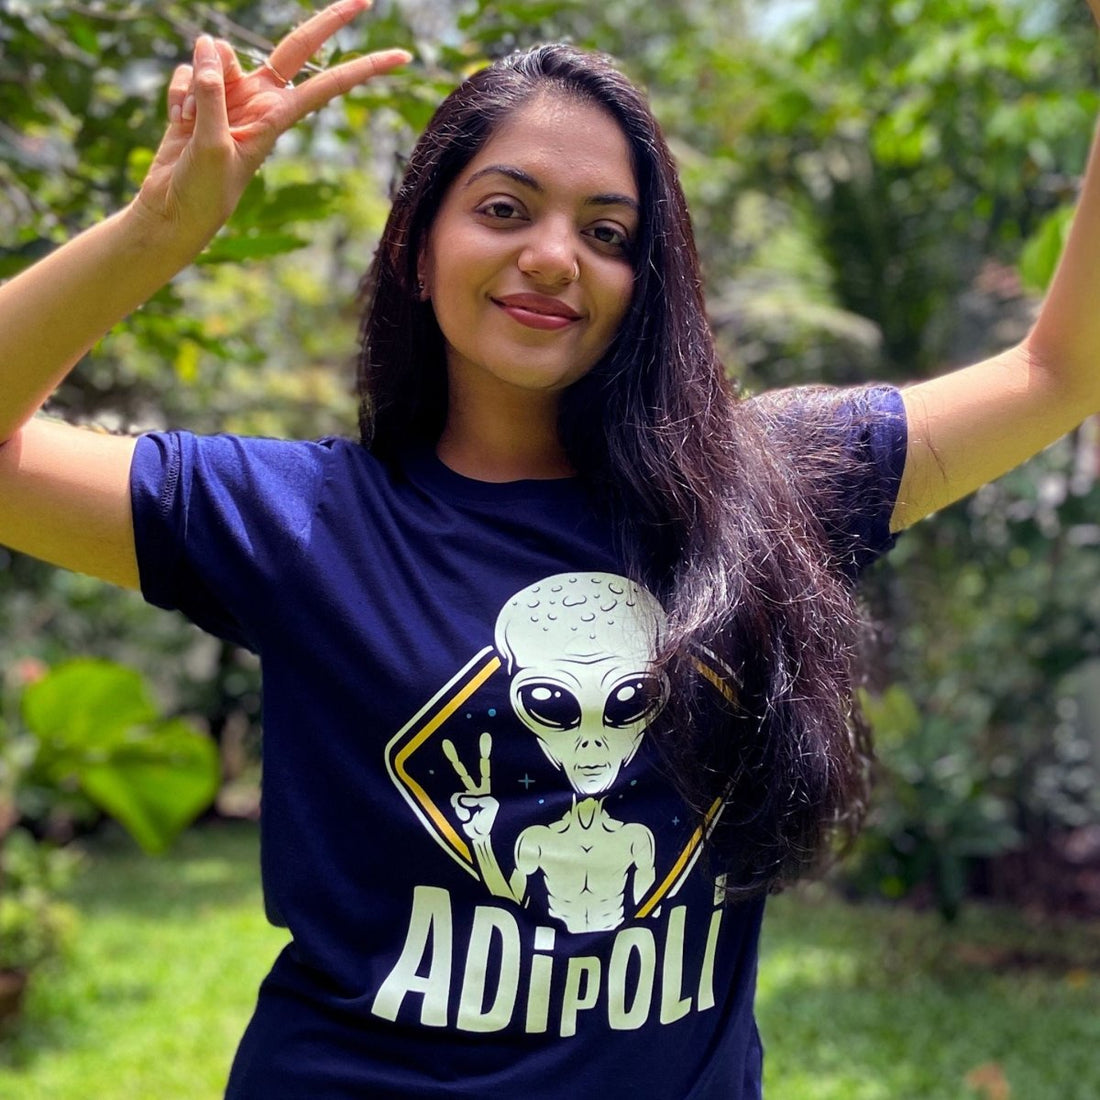 Adipoli T-shirt for Women